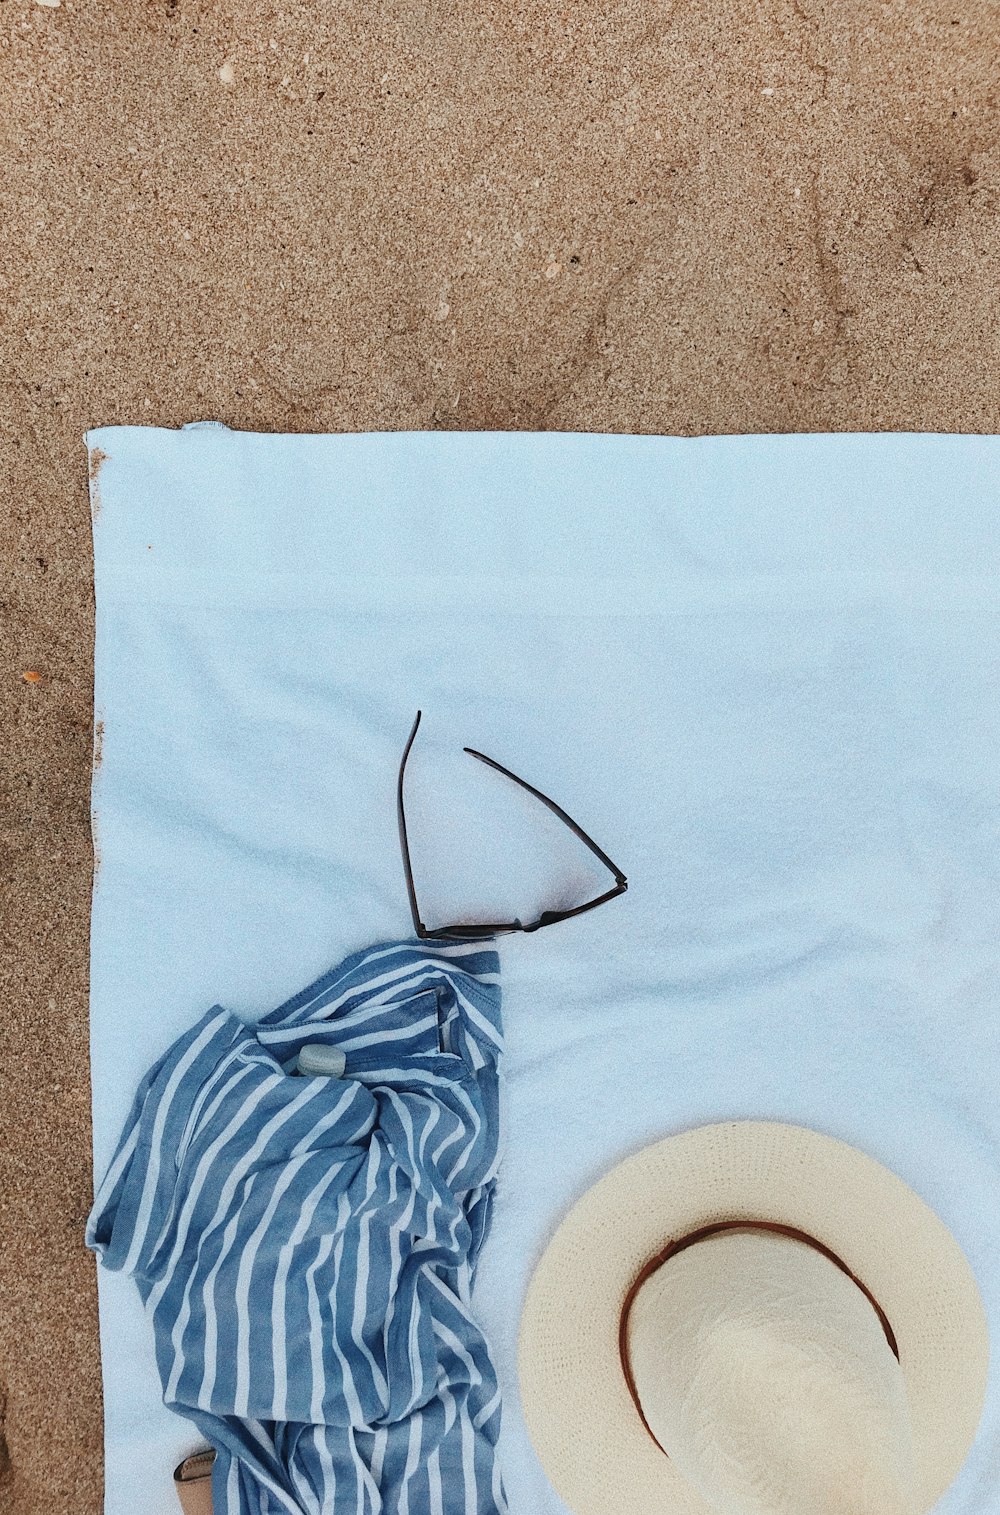 flay lay fotografia de cobertor, chapéu de verão, e óculos de sol em toalha de lã